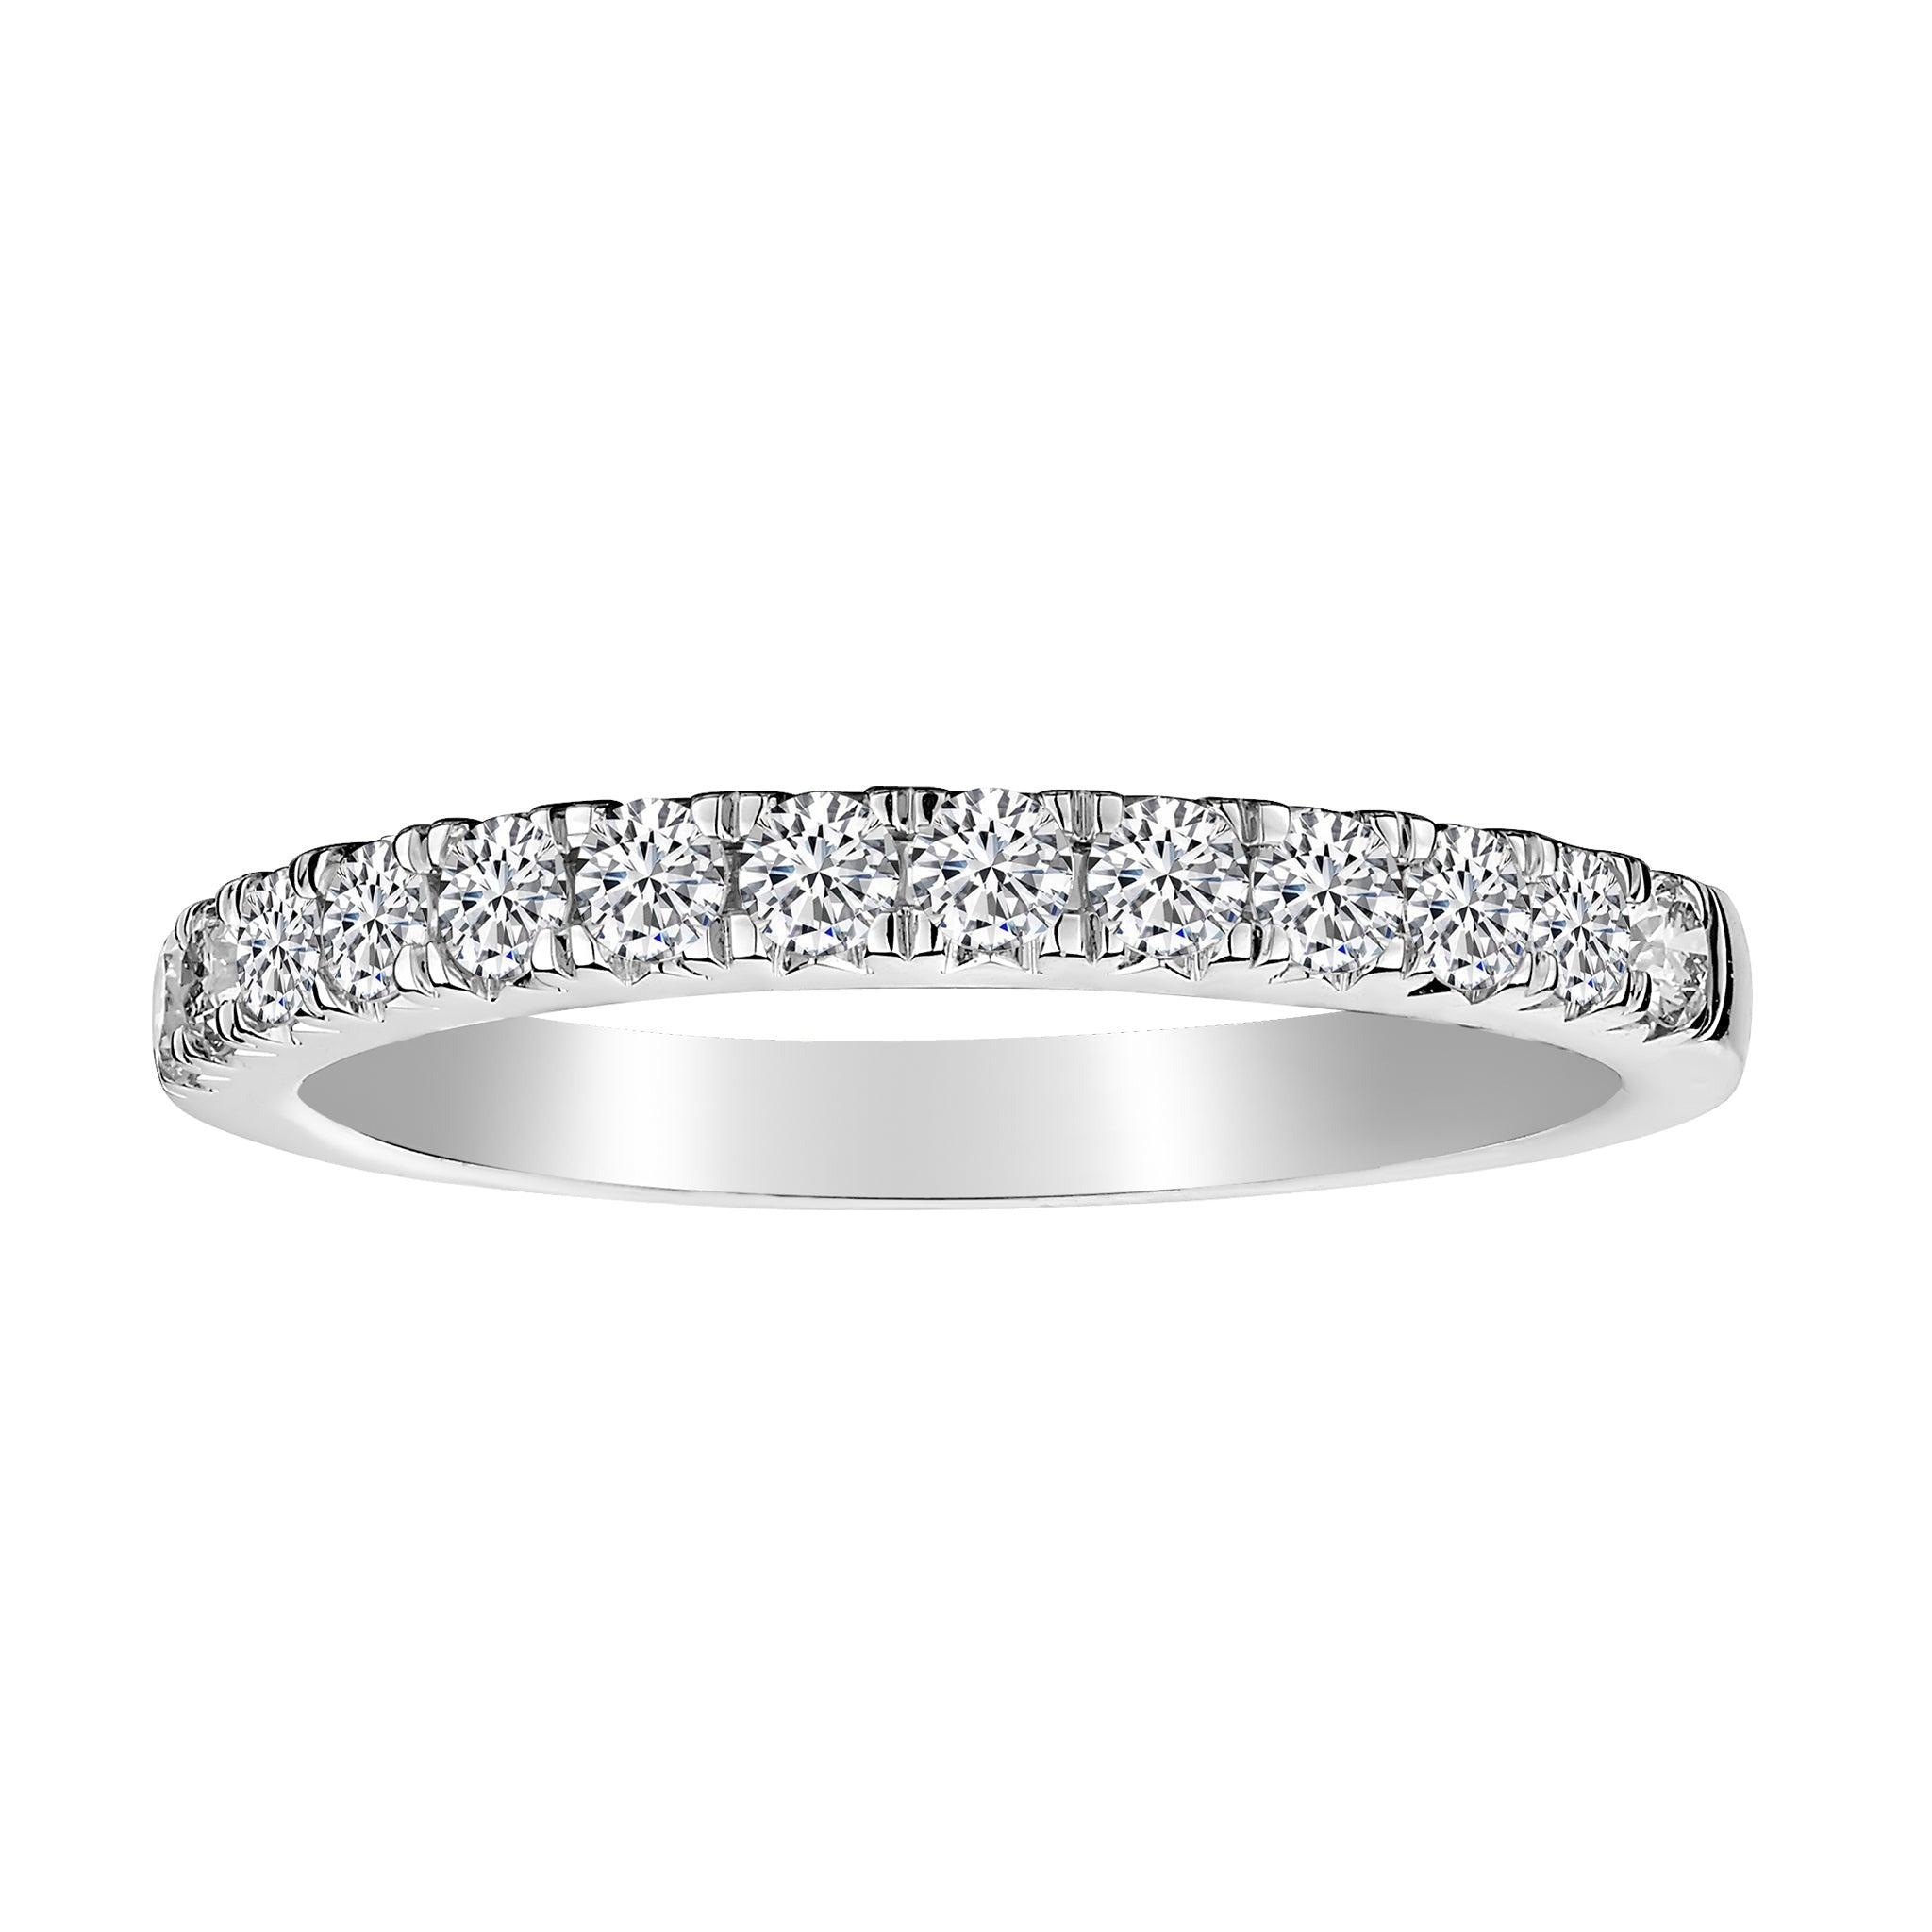 .50 Carat Lab Grown Diamond Band Ring, 10kt White Gold.......................NOW